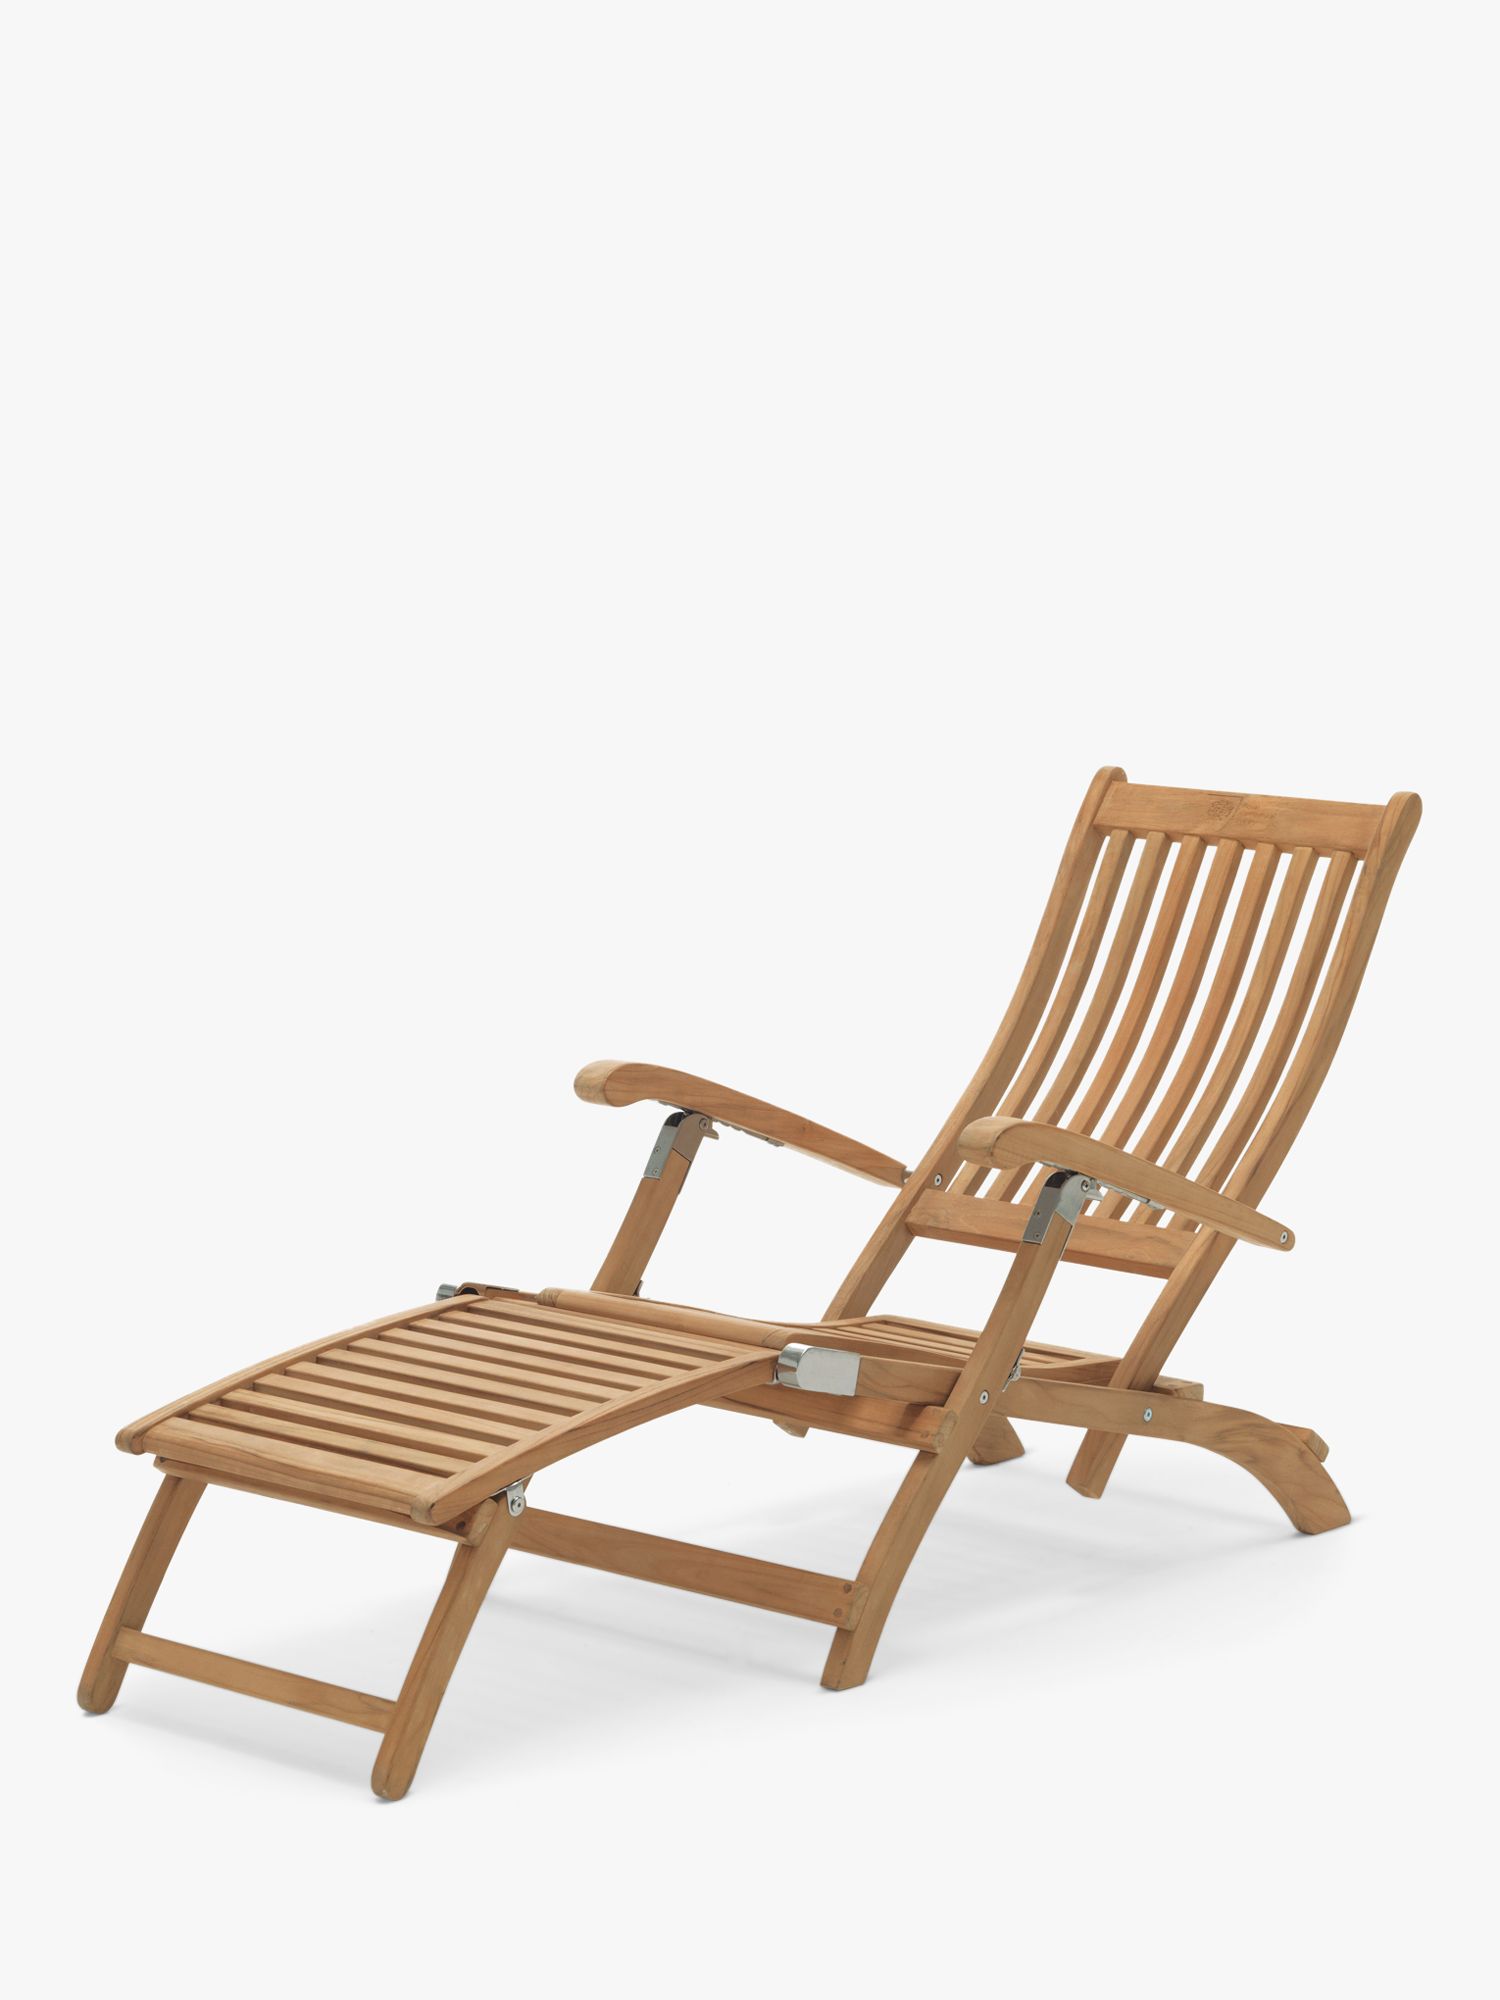 Photo of Kettler rhs chelsea garden steamer chair fsc-certified -eucalyptus wood- natural